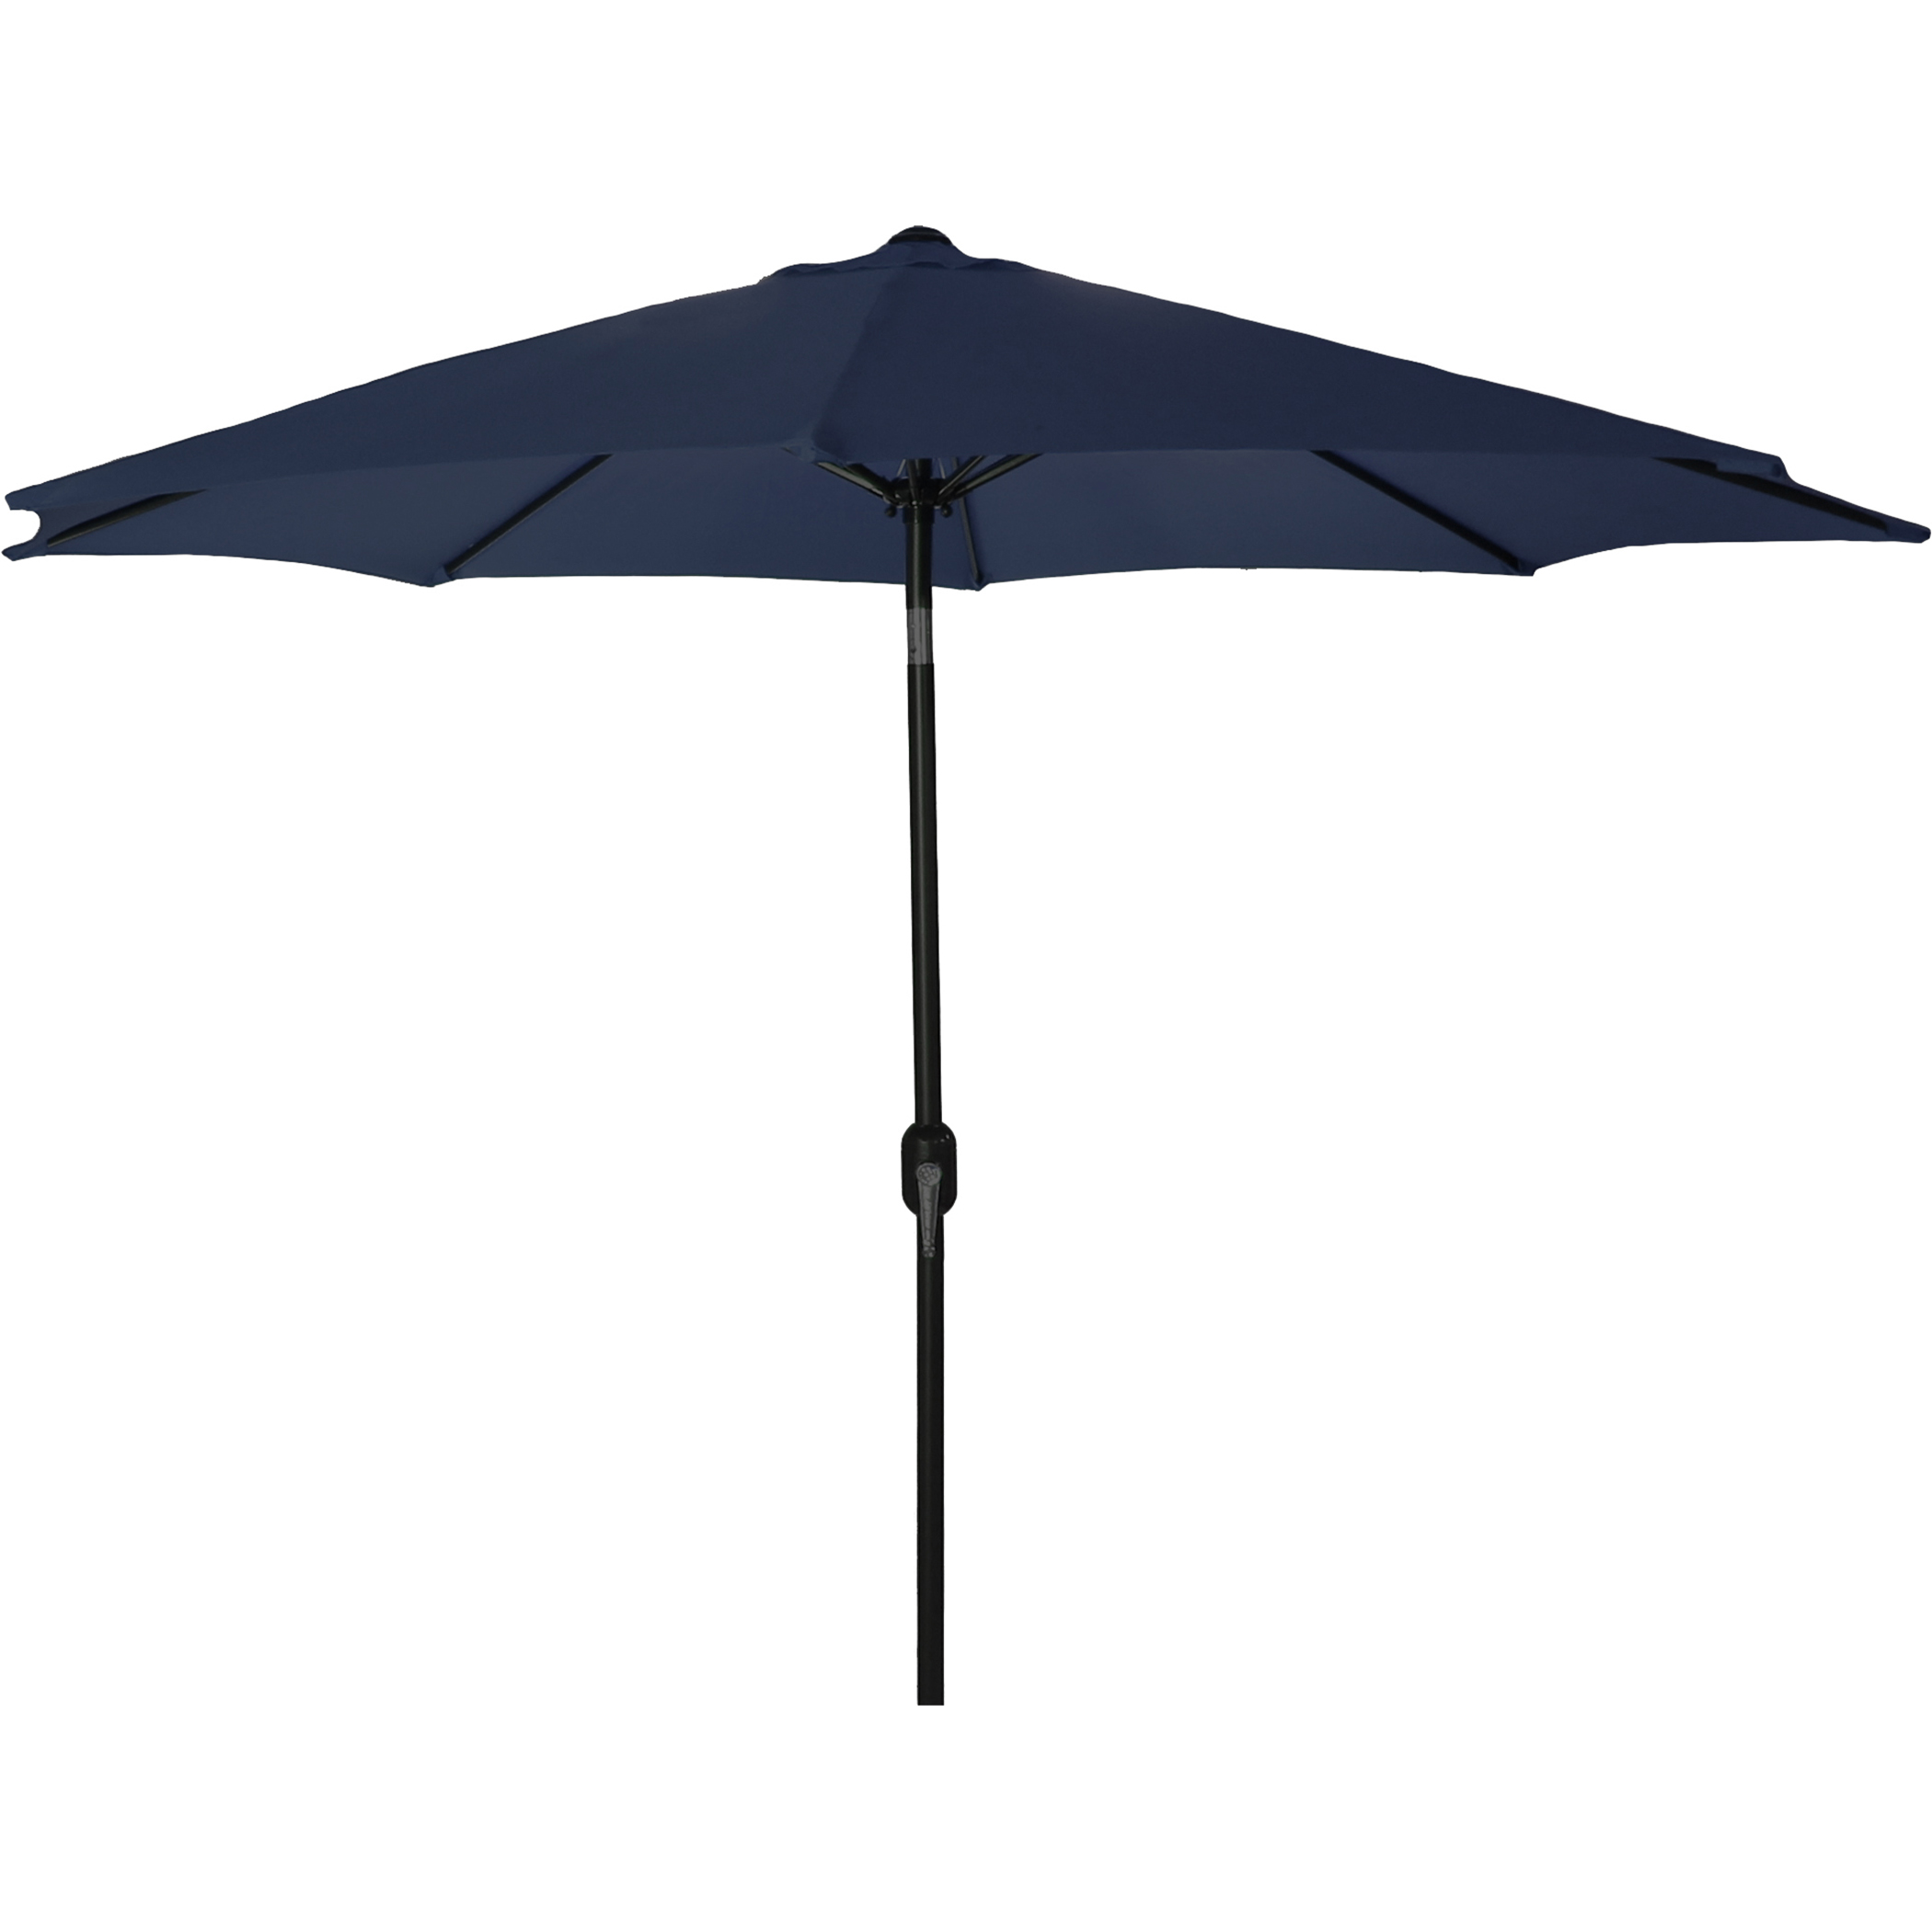 Jordan Manufacturing 8' Navy Solid Octagon Folding Patio Umbrella with Push-Button Tilt and Crank Opening - image 1 of 7